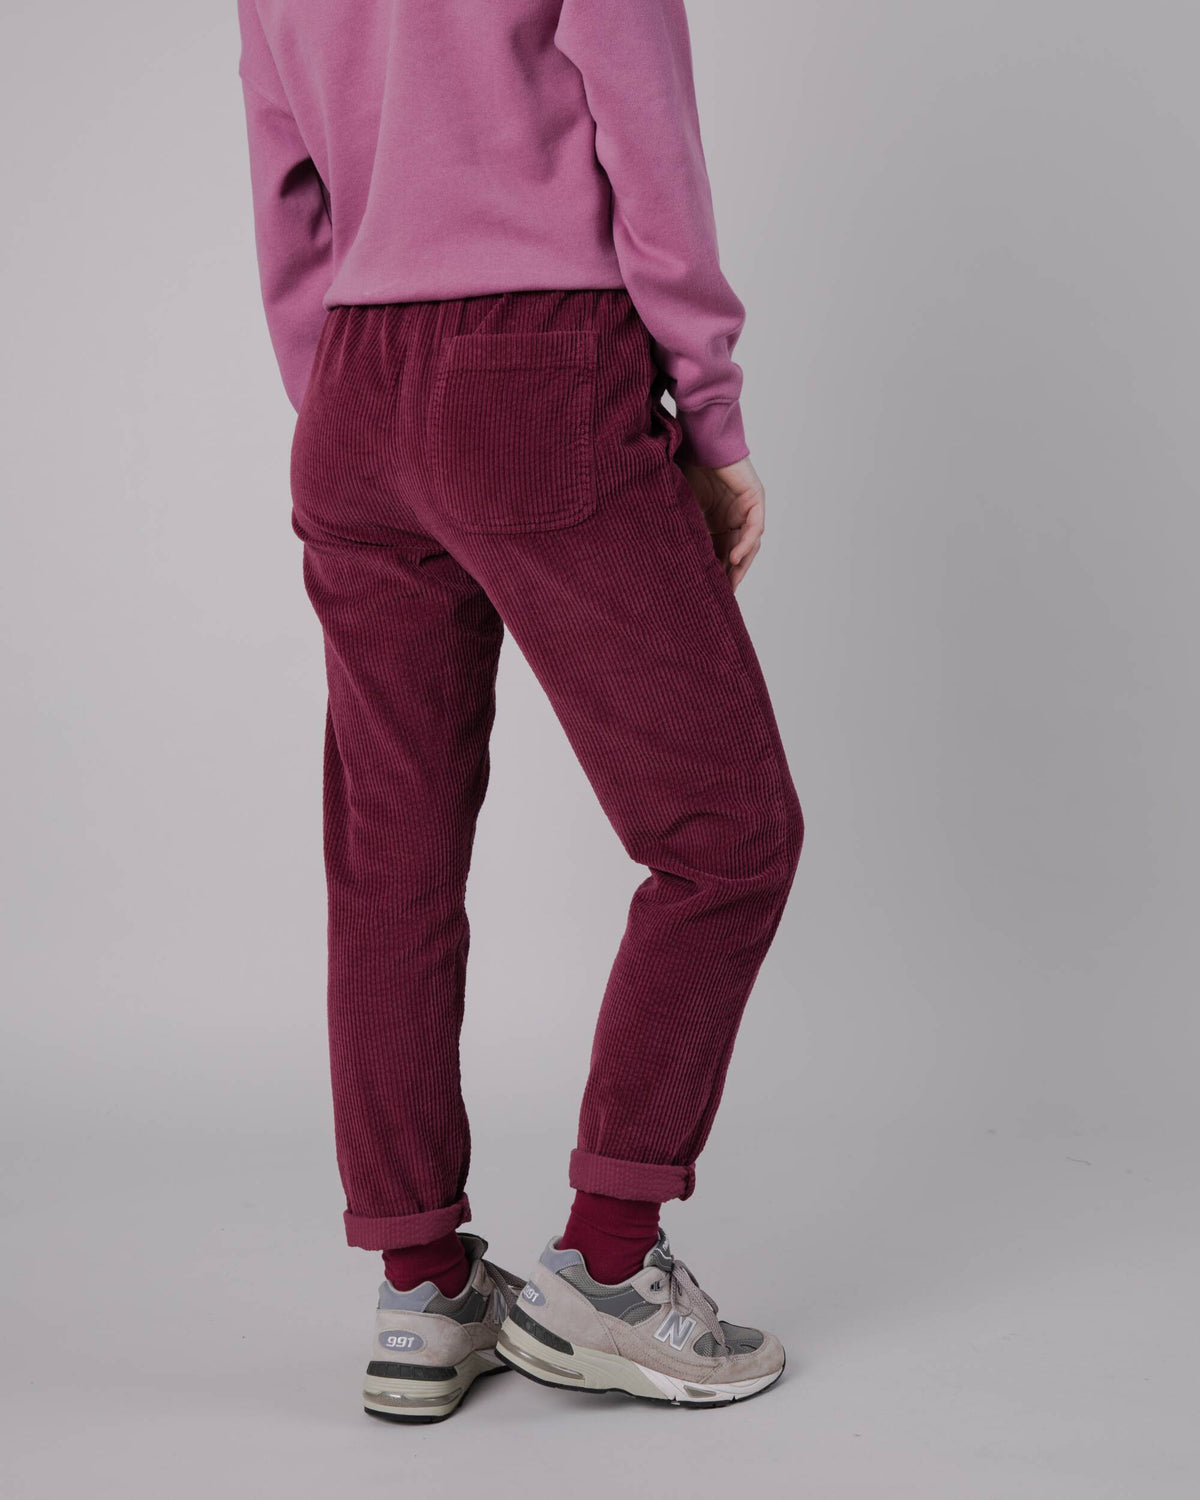 Bill blass Corduroy jeans womens 12 stretch high rise zip closure maroon  red | eBay